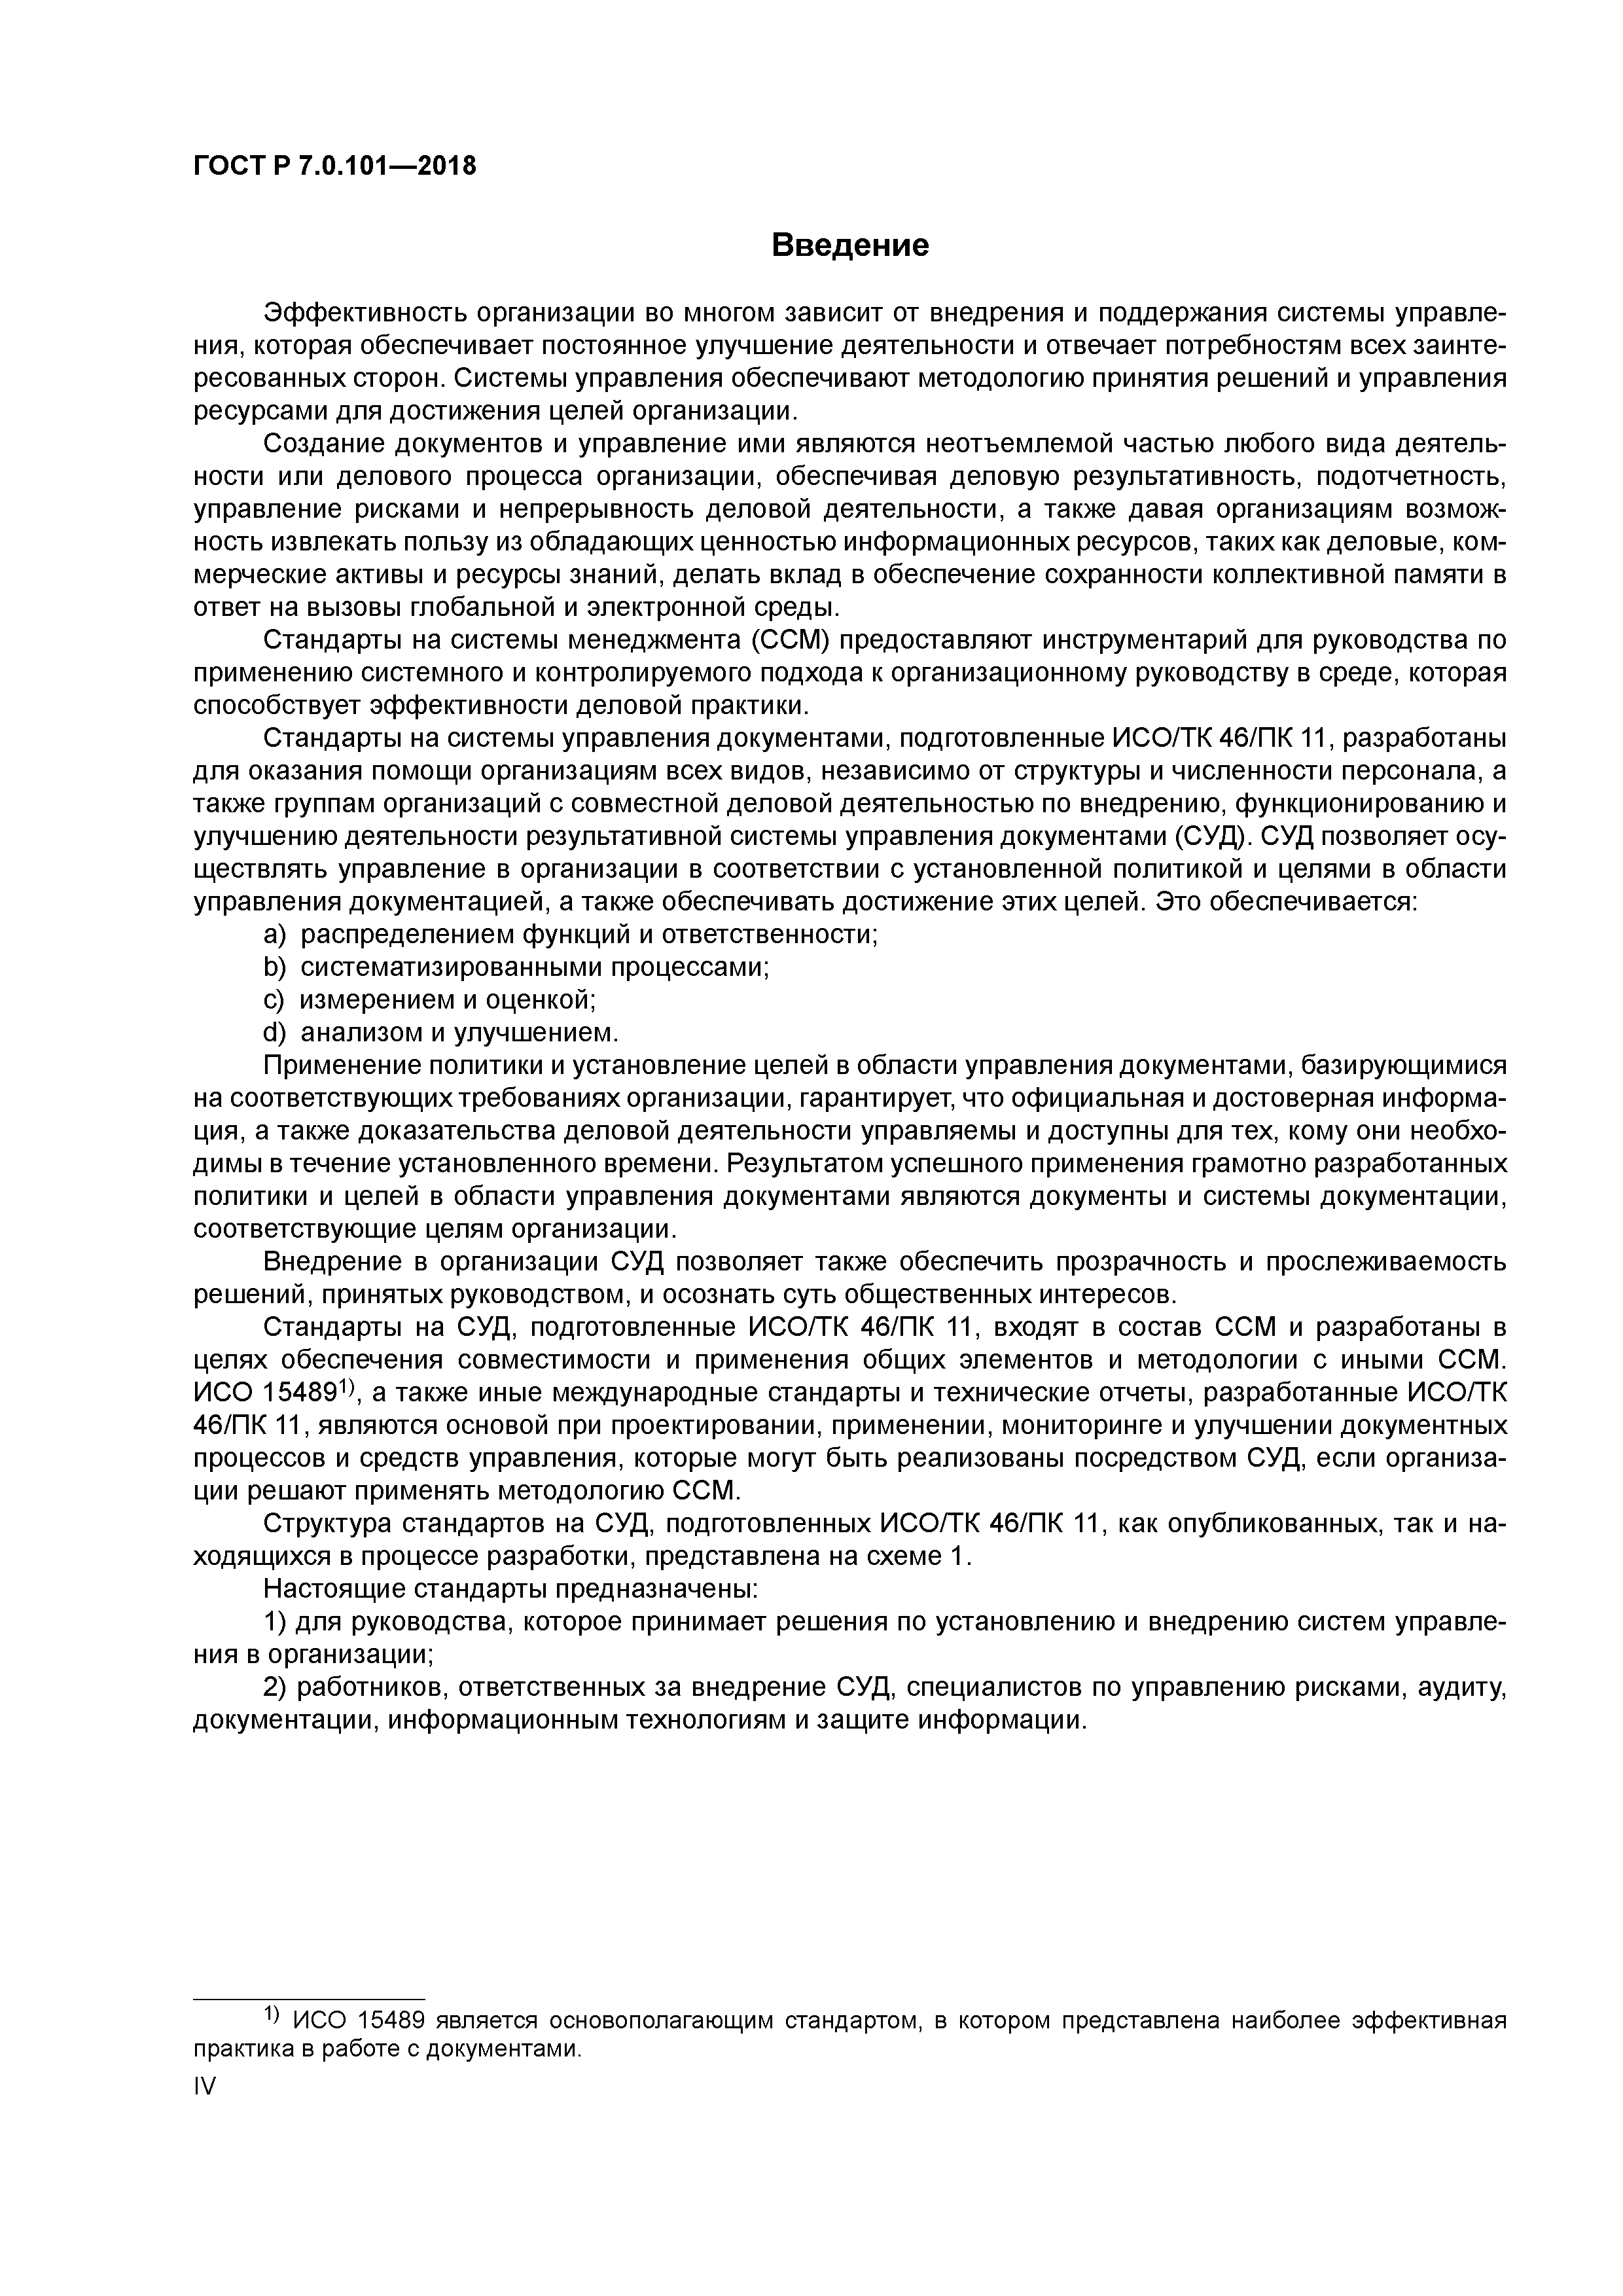 ГОСТ Р 7.0.101-2018